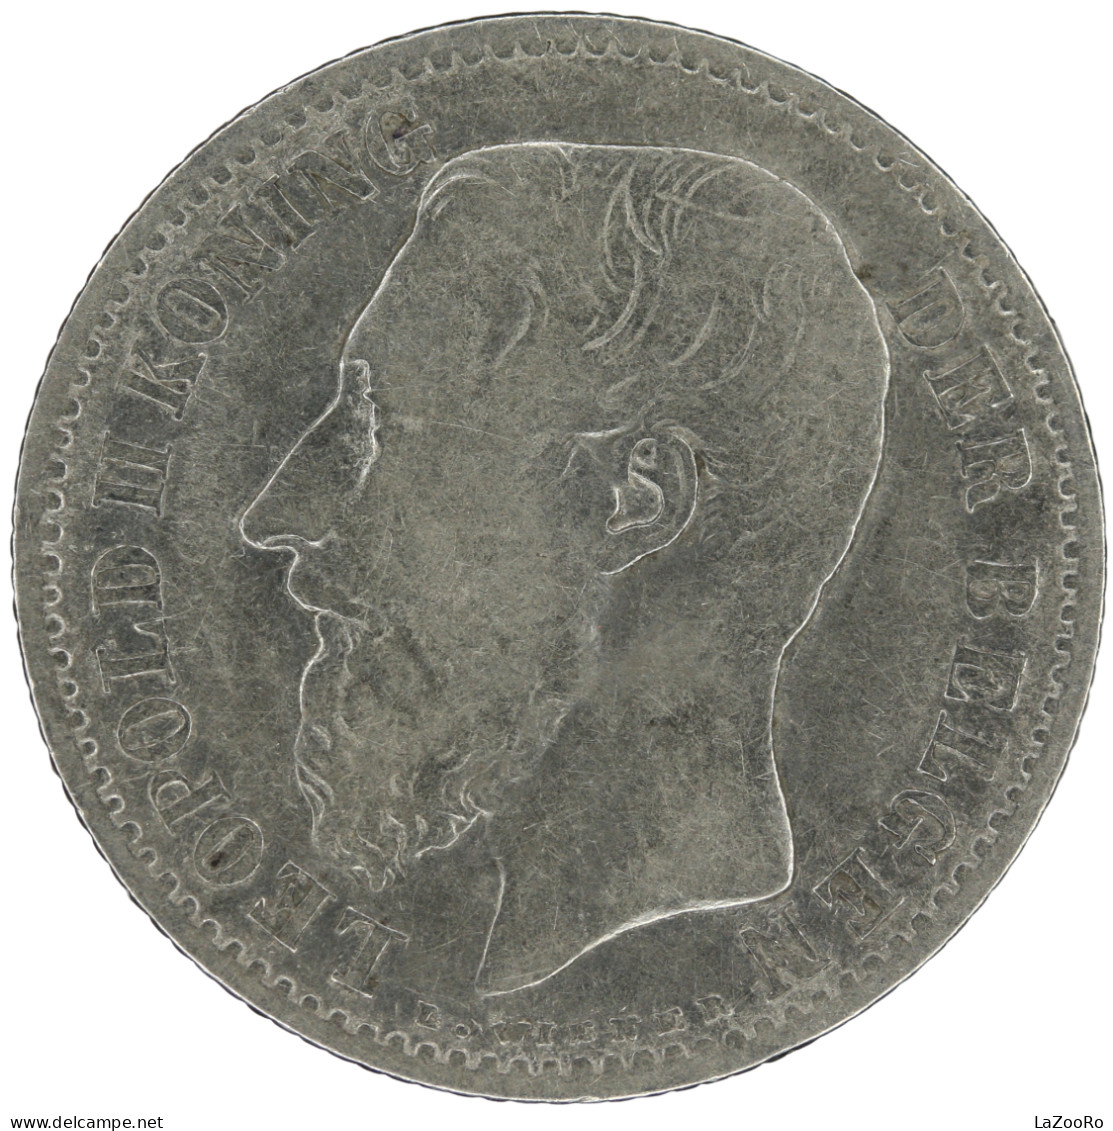 LaZooRo: Belgium 1 Franc 1886 VF - Silver - 1 Franc